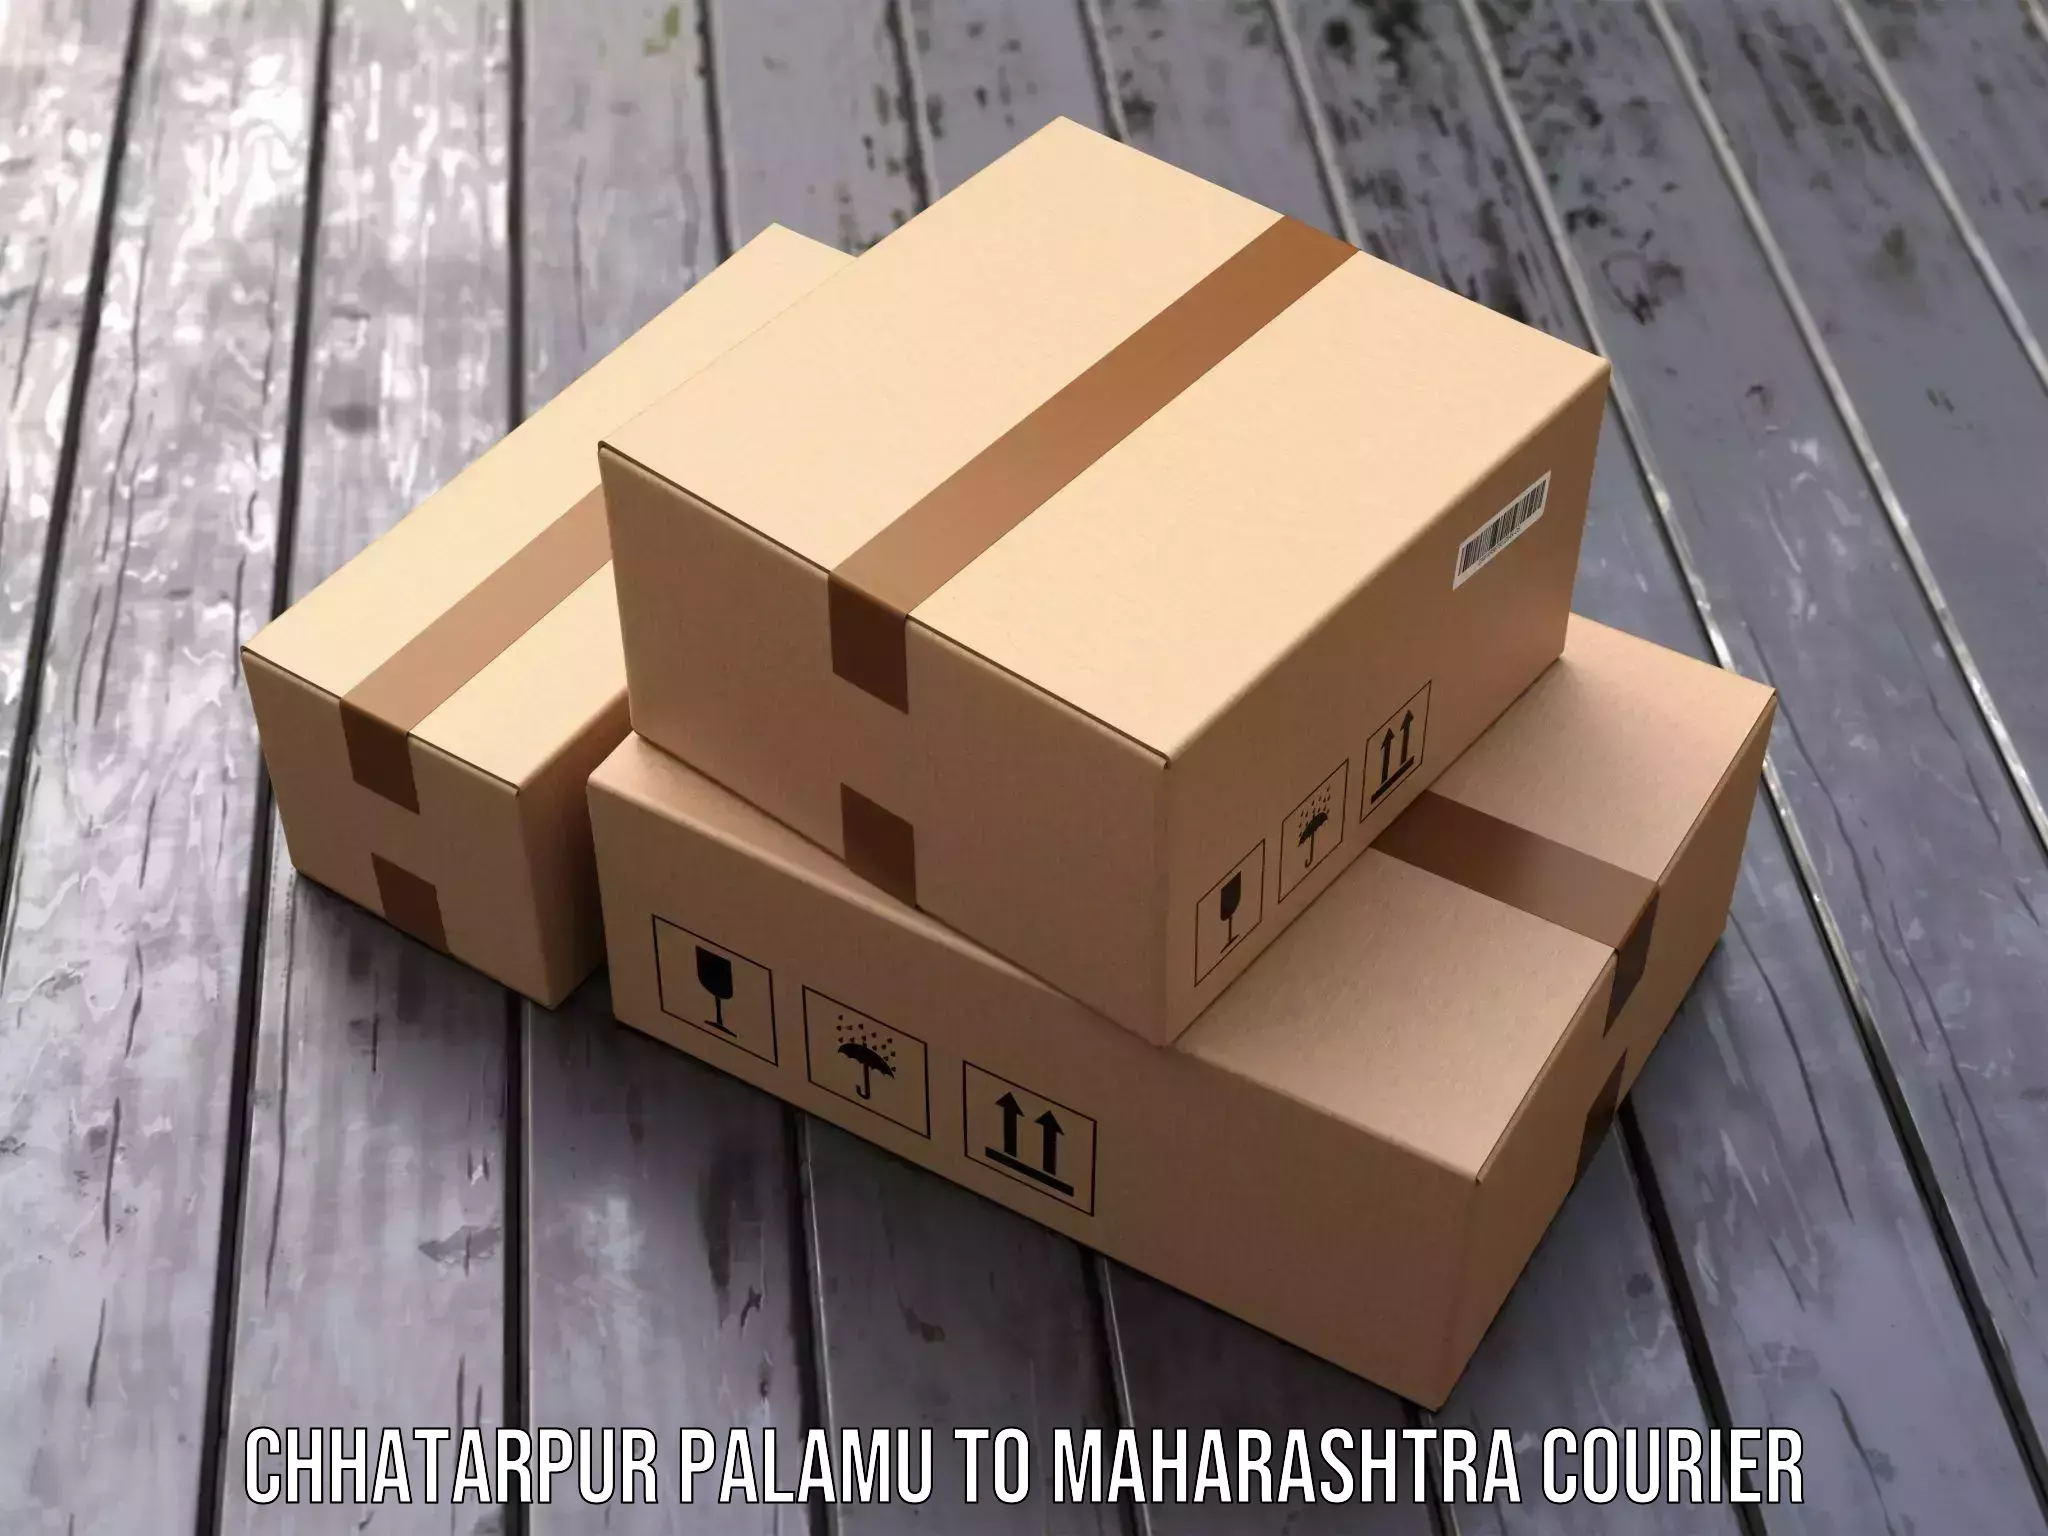 Express courier capabilities Chhatarpur Palamu to Nagpur